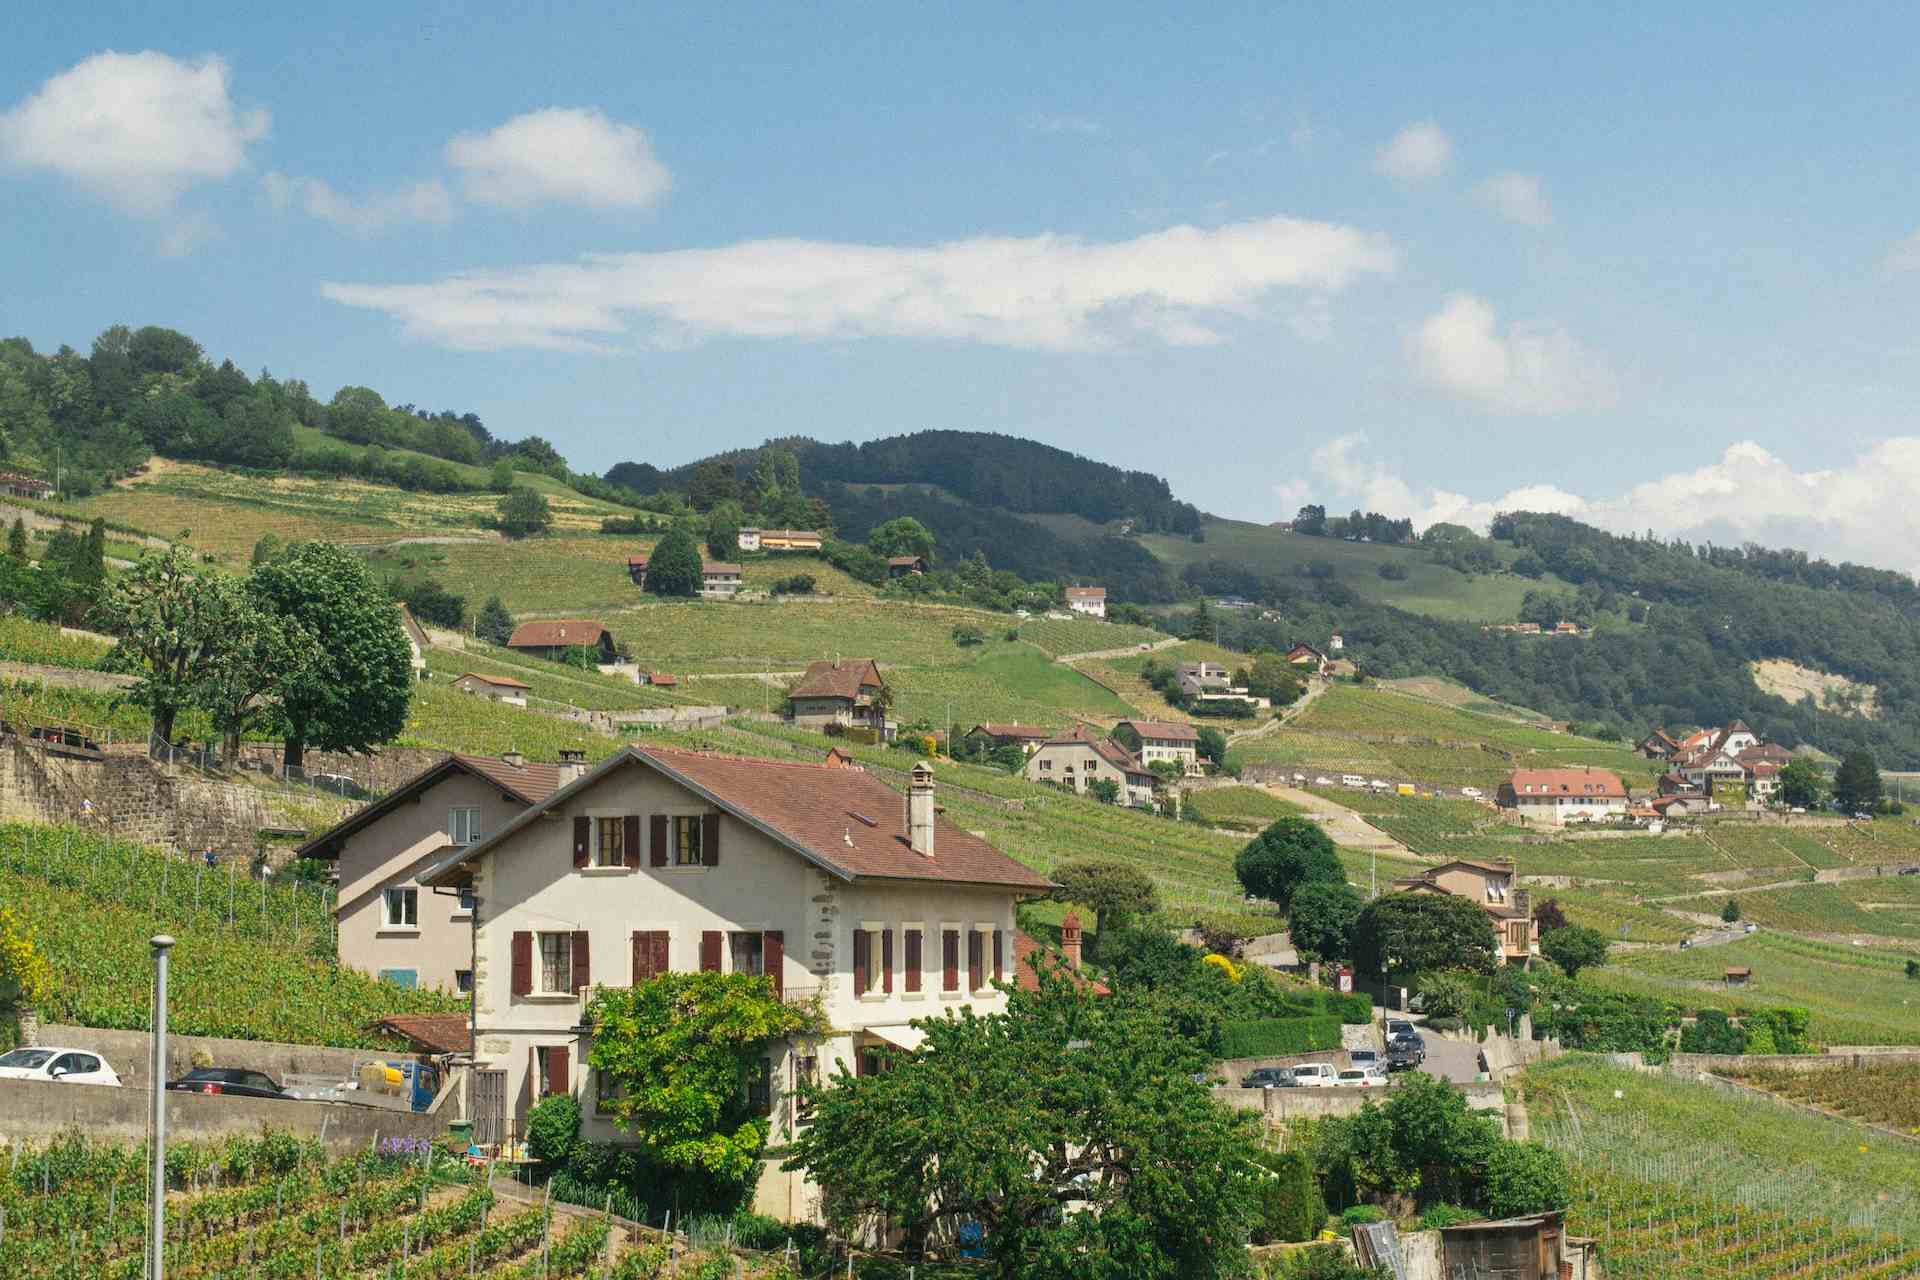 Béday, producer in Monricher canton of Vaud in Switzerland